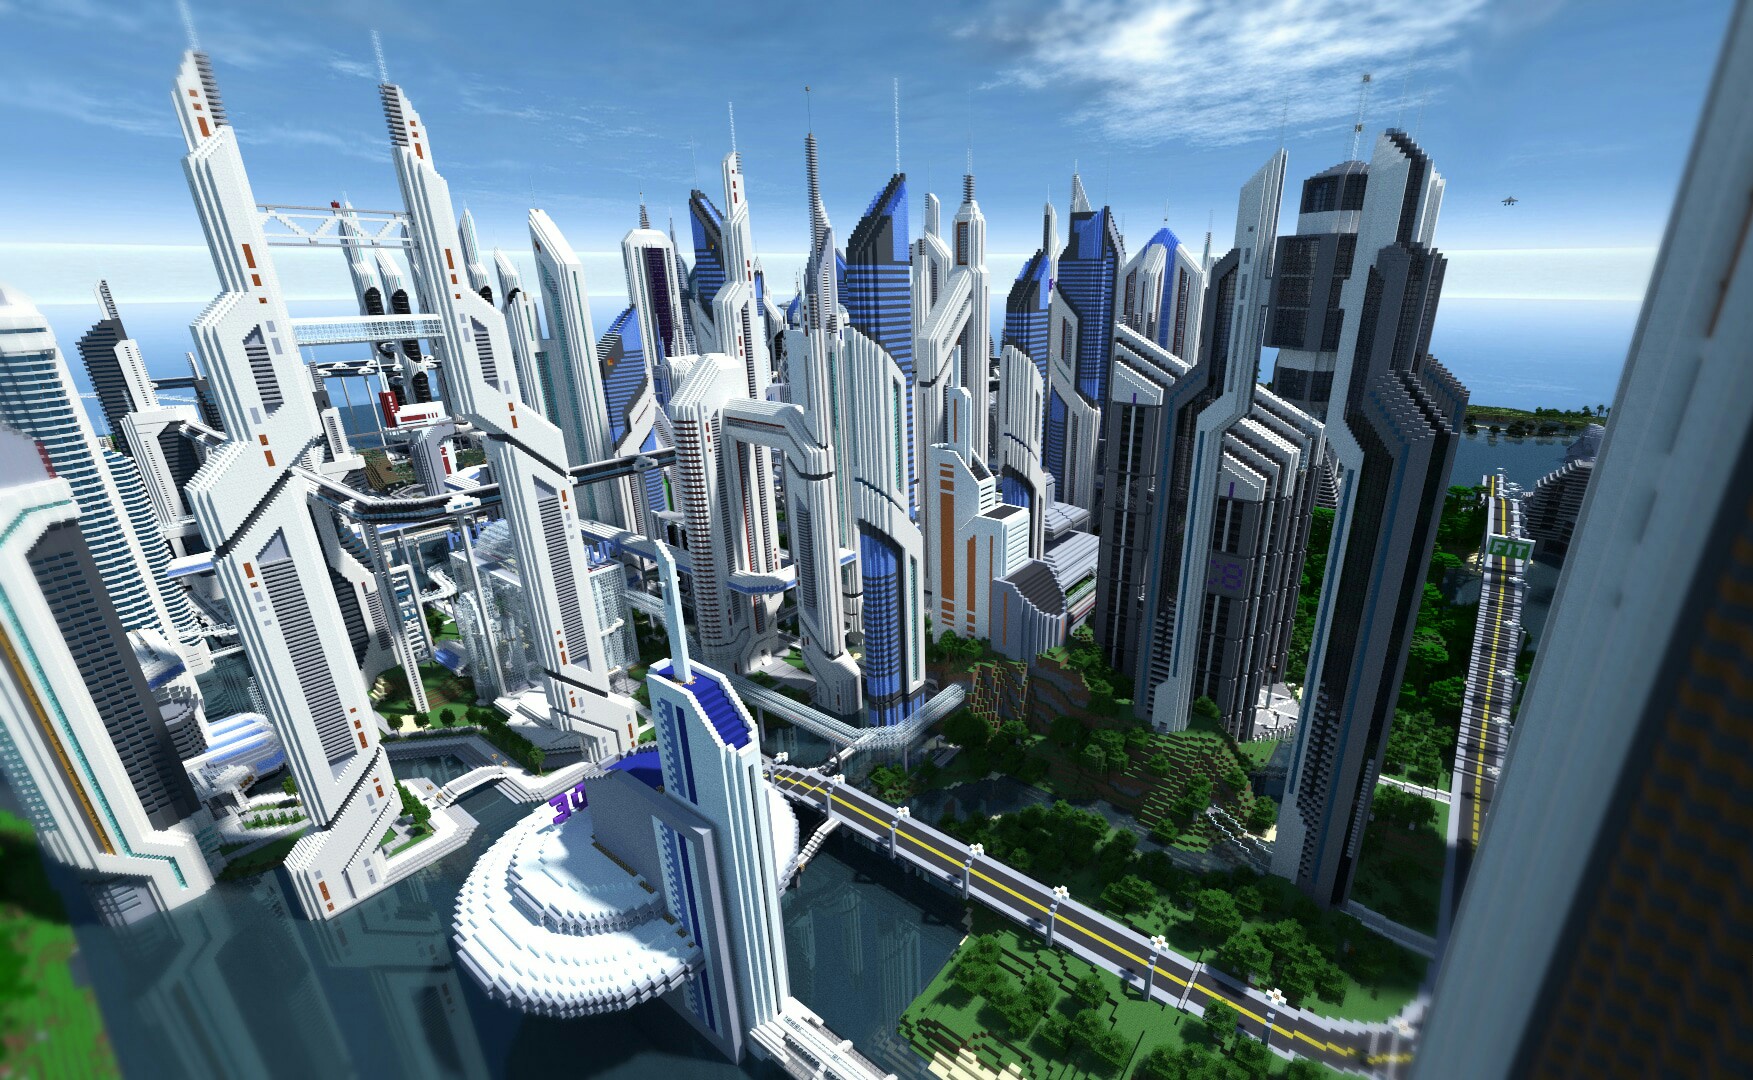 futuristic city map minecraft